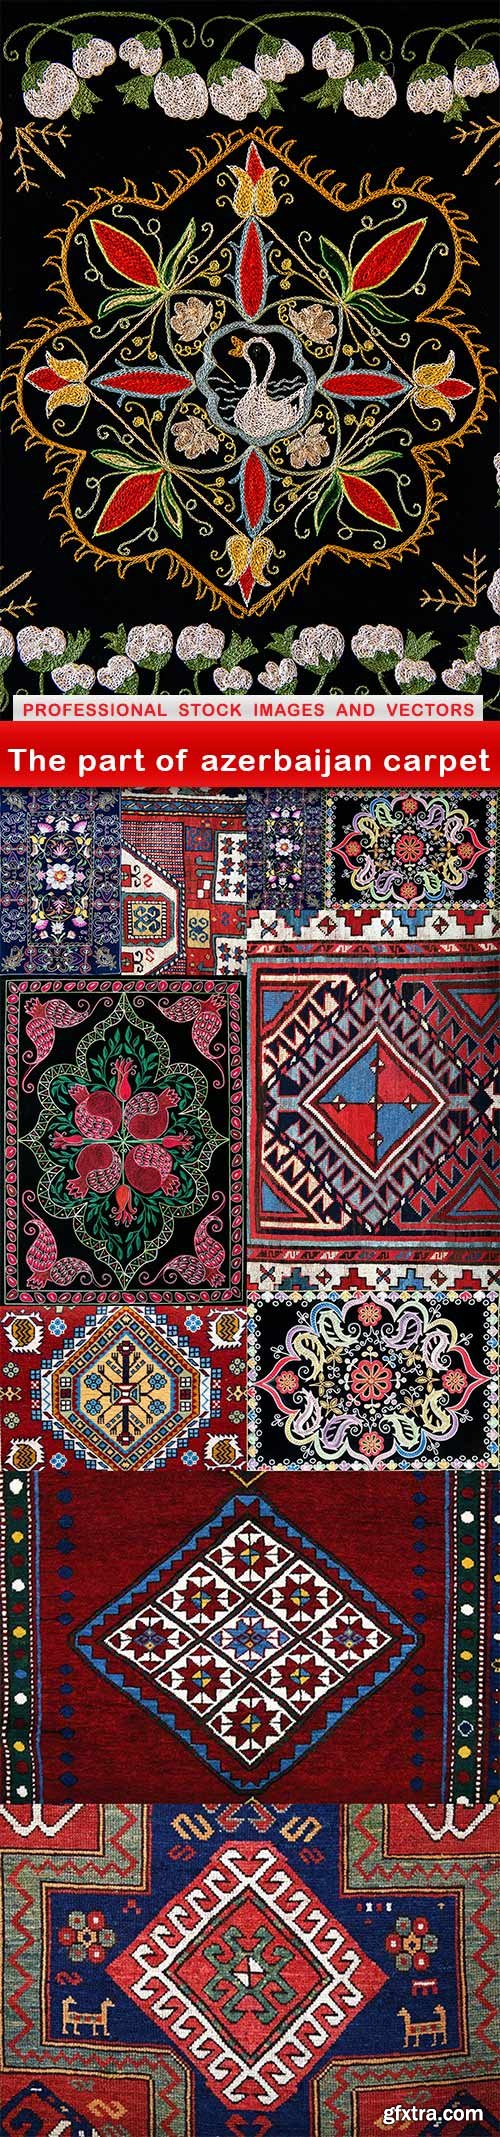 The part of azerbaijan carpet - 11 UHQ JPEG